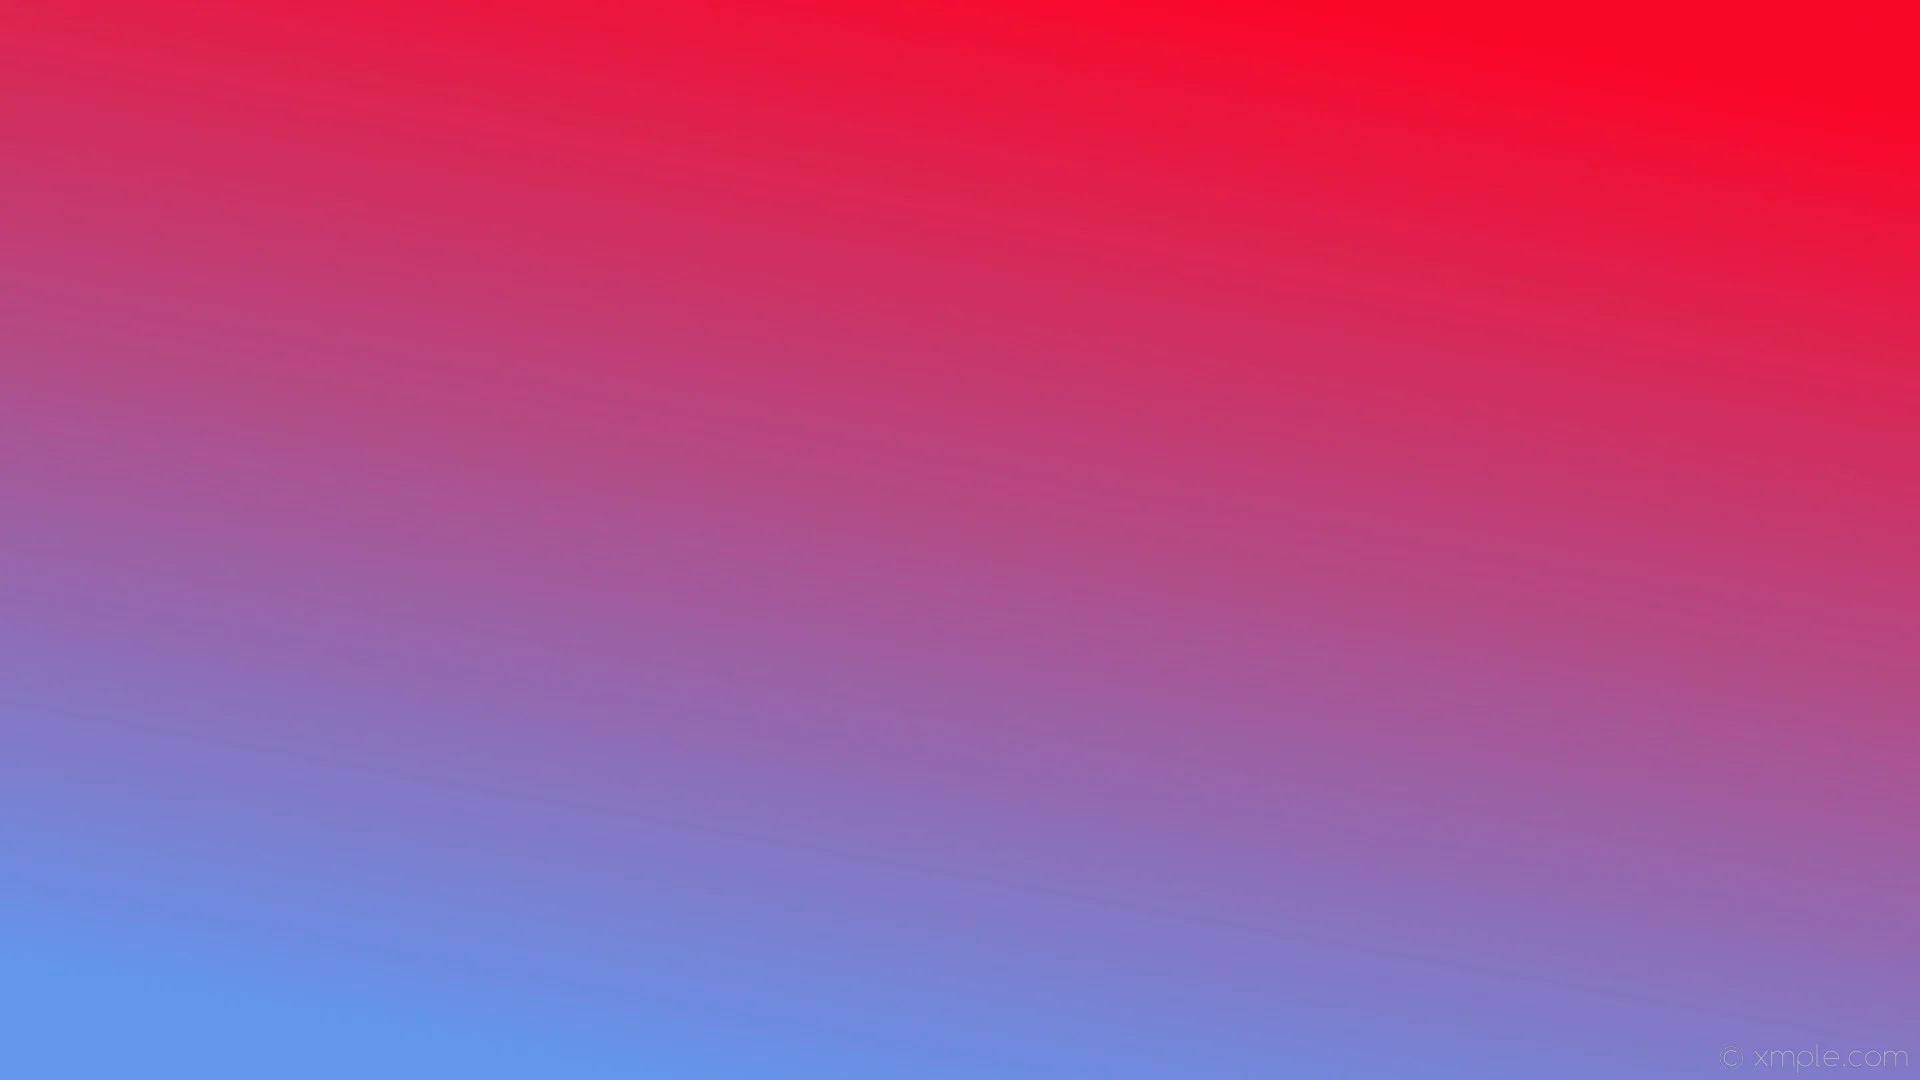 wallpaper gradient red linear blue cornflower blue #fb0628 #6495ed 60Â°